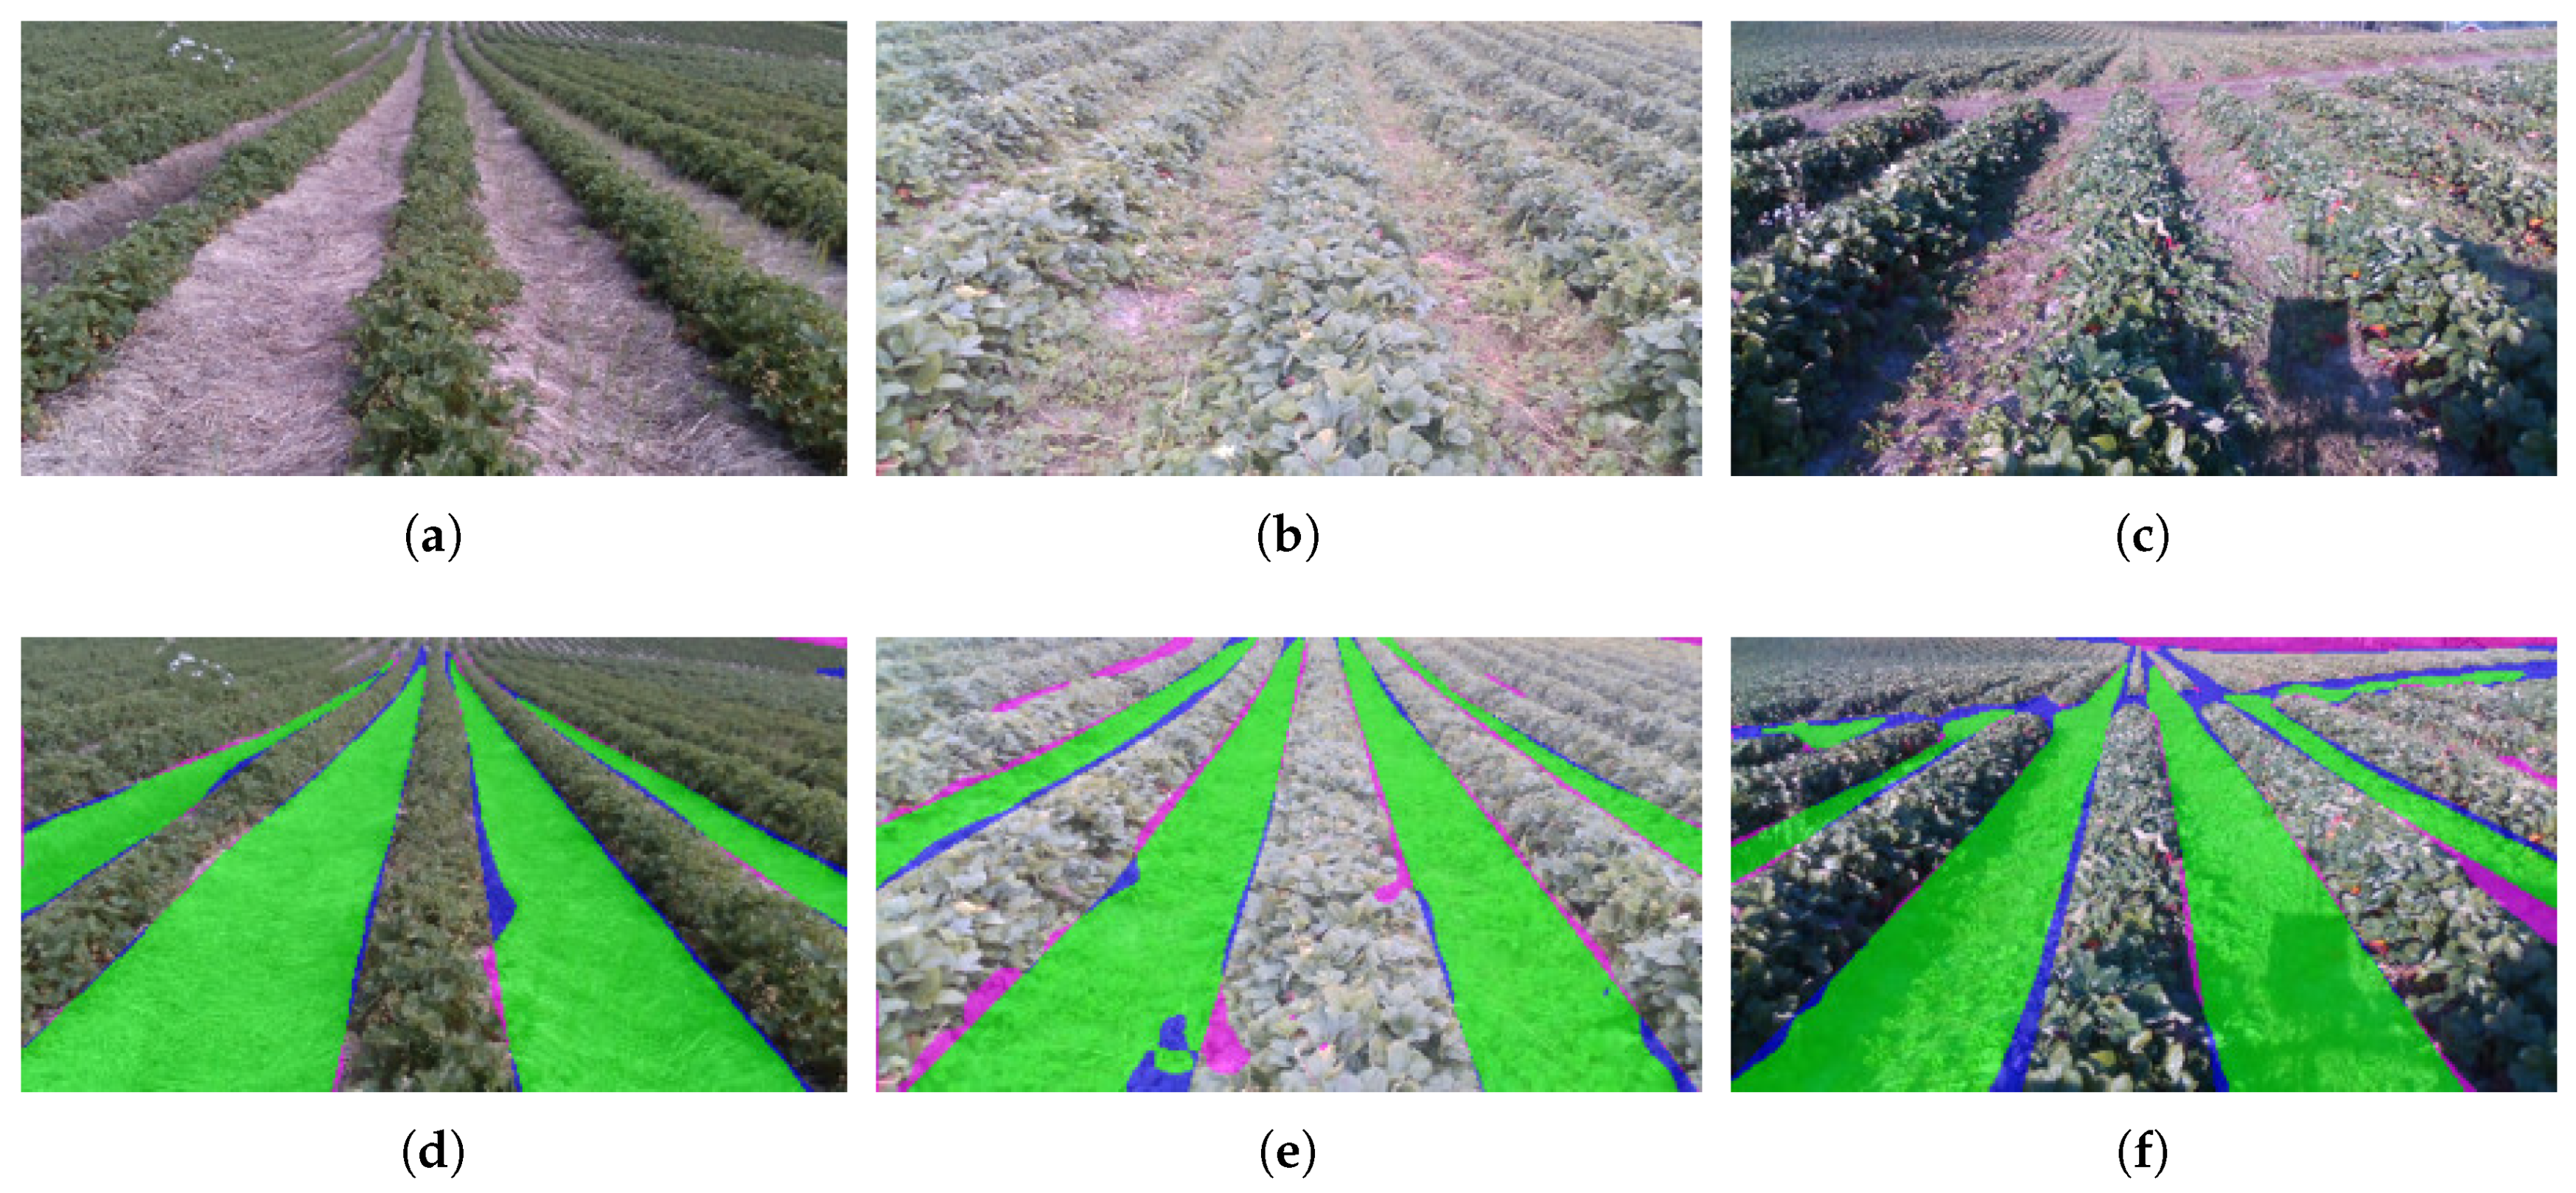 Sensors | Free Full-Text | Autonomous Crop Row Guidance Using Adaptive  Multi-ROI in Strawberry Fields | HTML